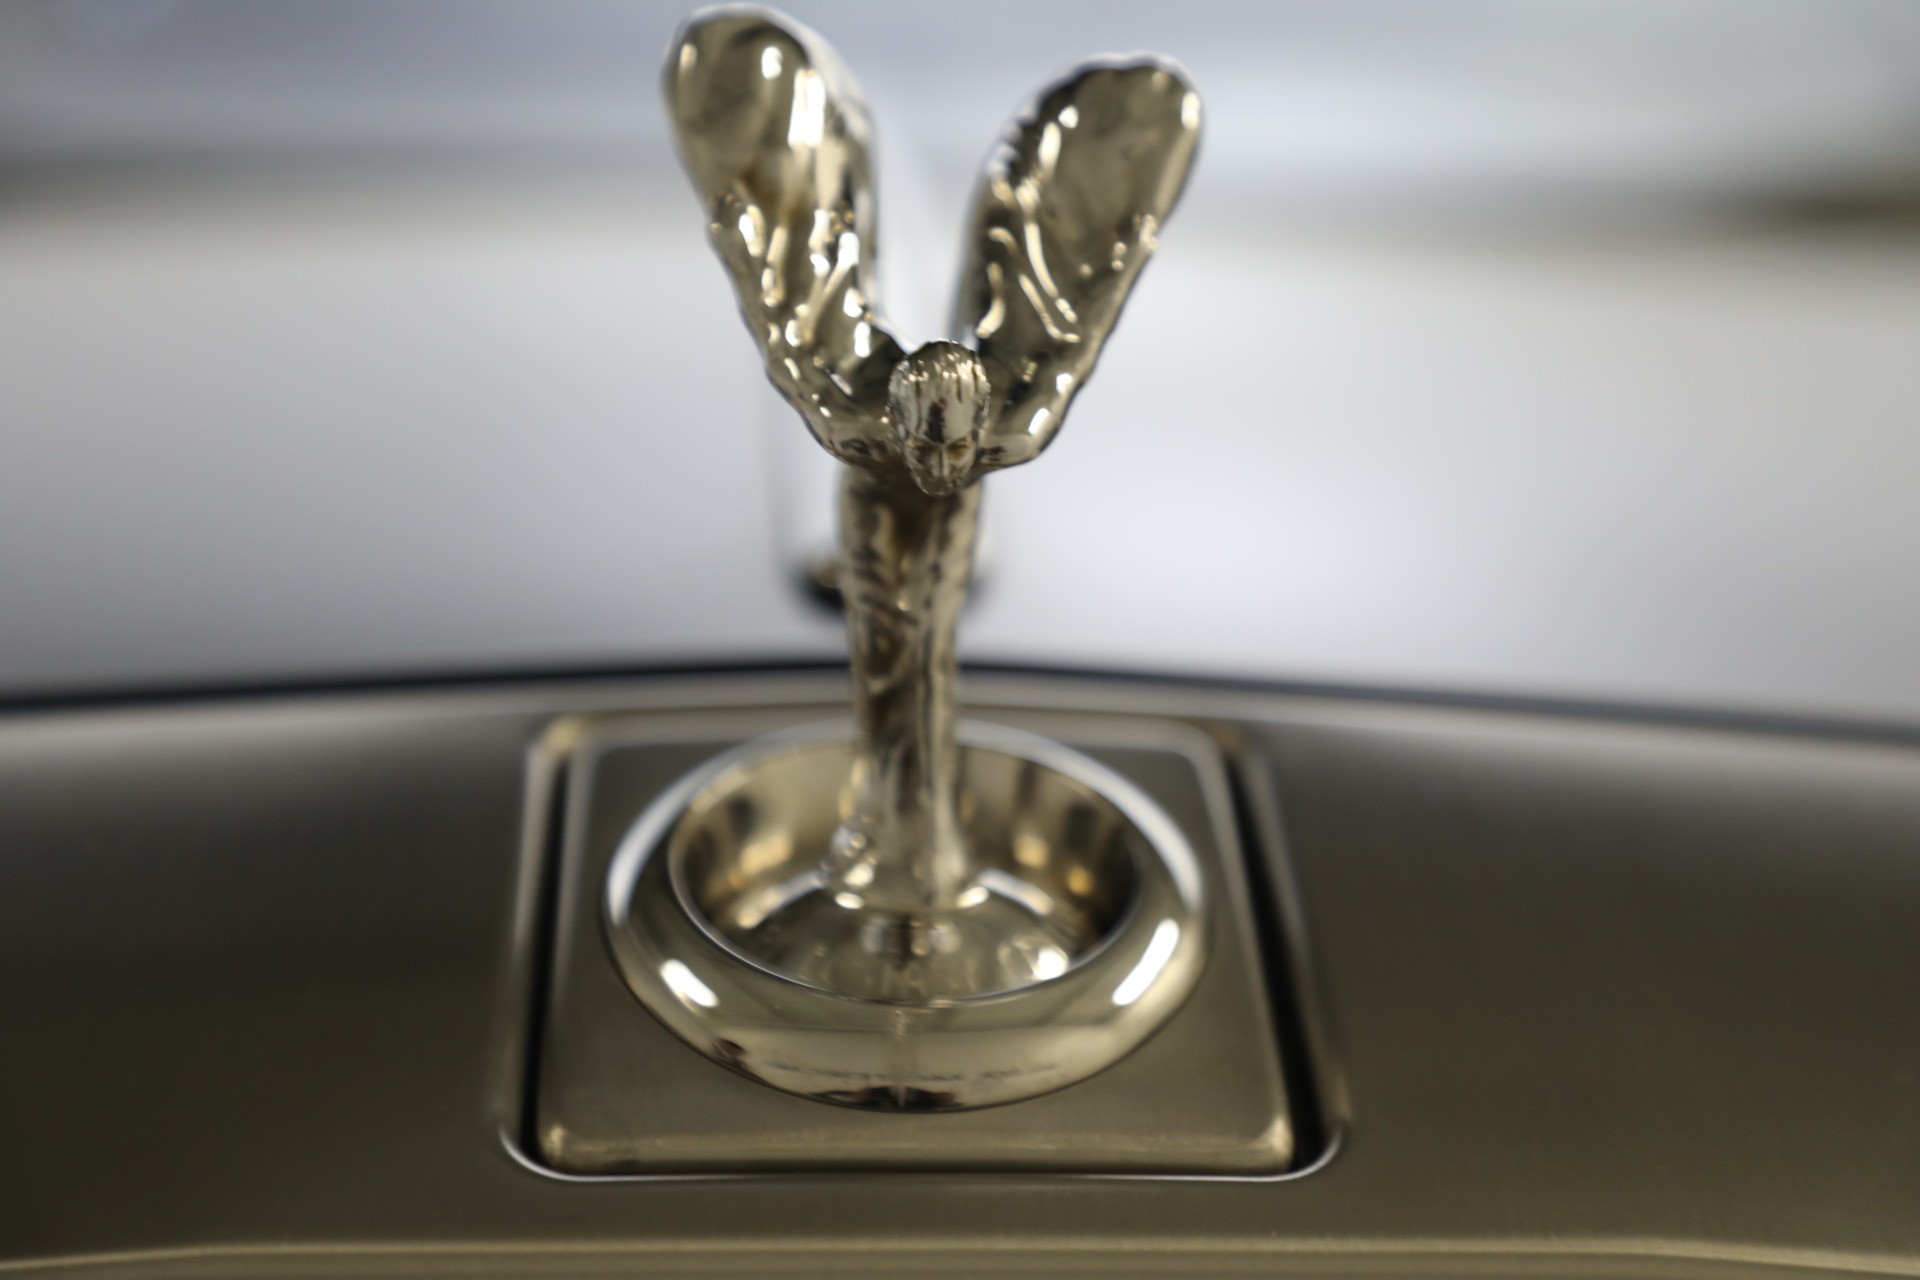 Used 2012 Rolls Royce Phantom Coupe